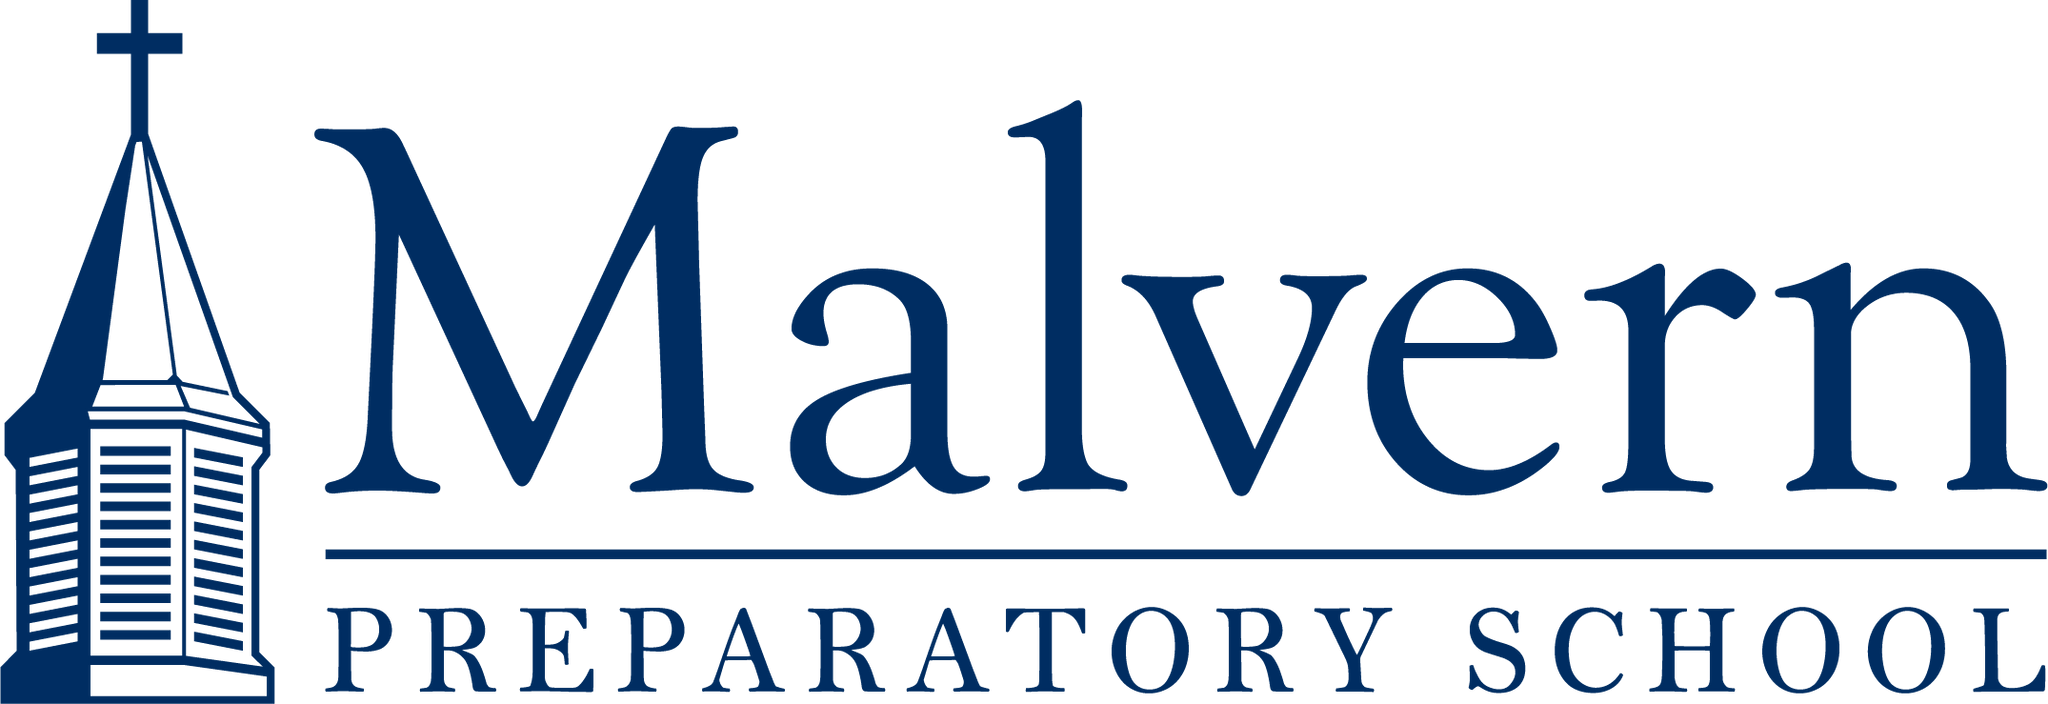 Malvern Preparatory School - 2020 Commencement - Active Image Media